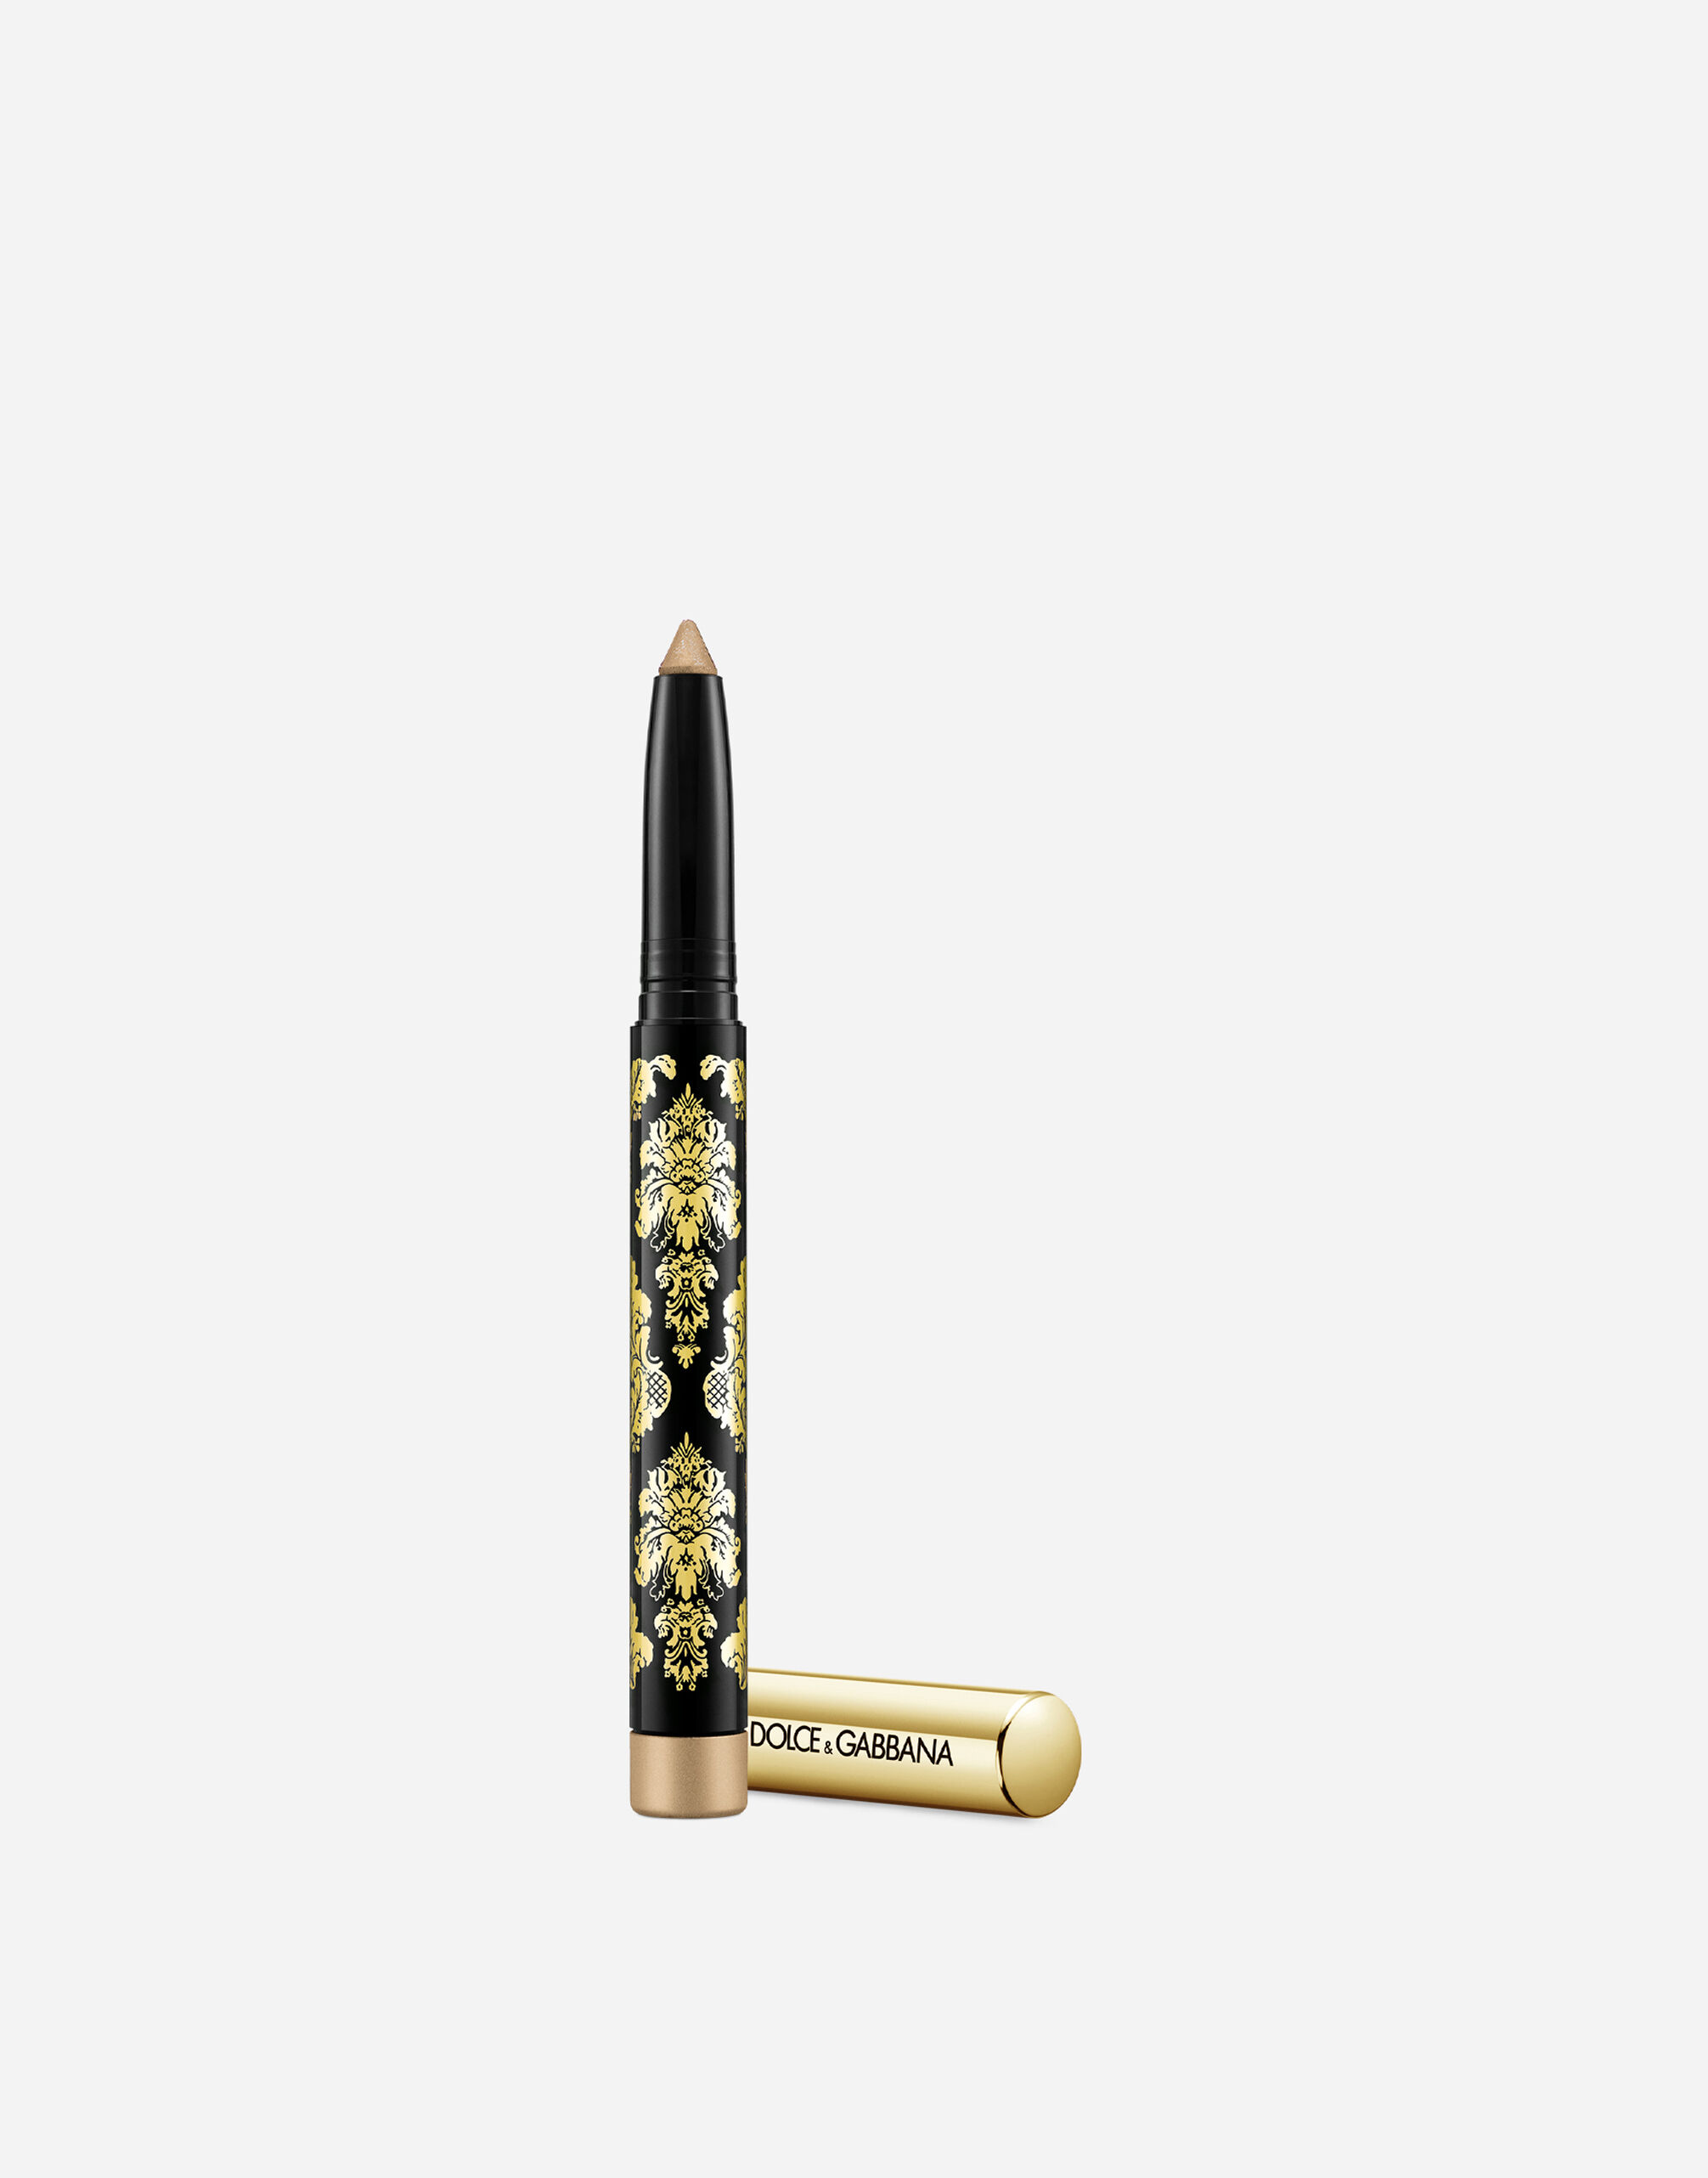 Тени-карандаш для глаз Dolce & Gabbana Intenseyes кремовые, №5 Taupe, 1,4 г тени для глаз кремовые influence beauty alien тон 01 5 г